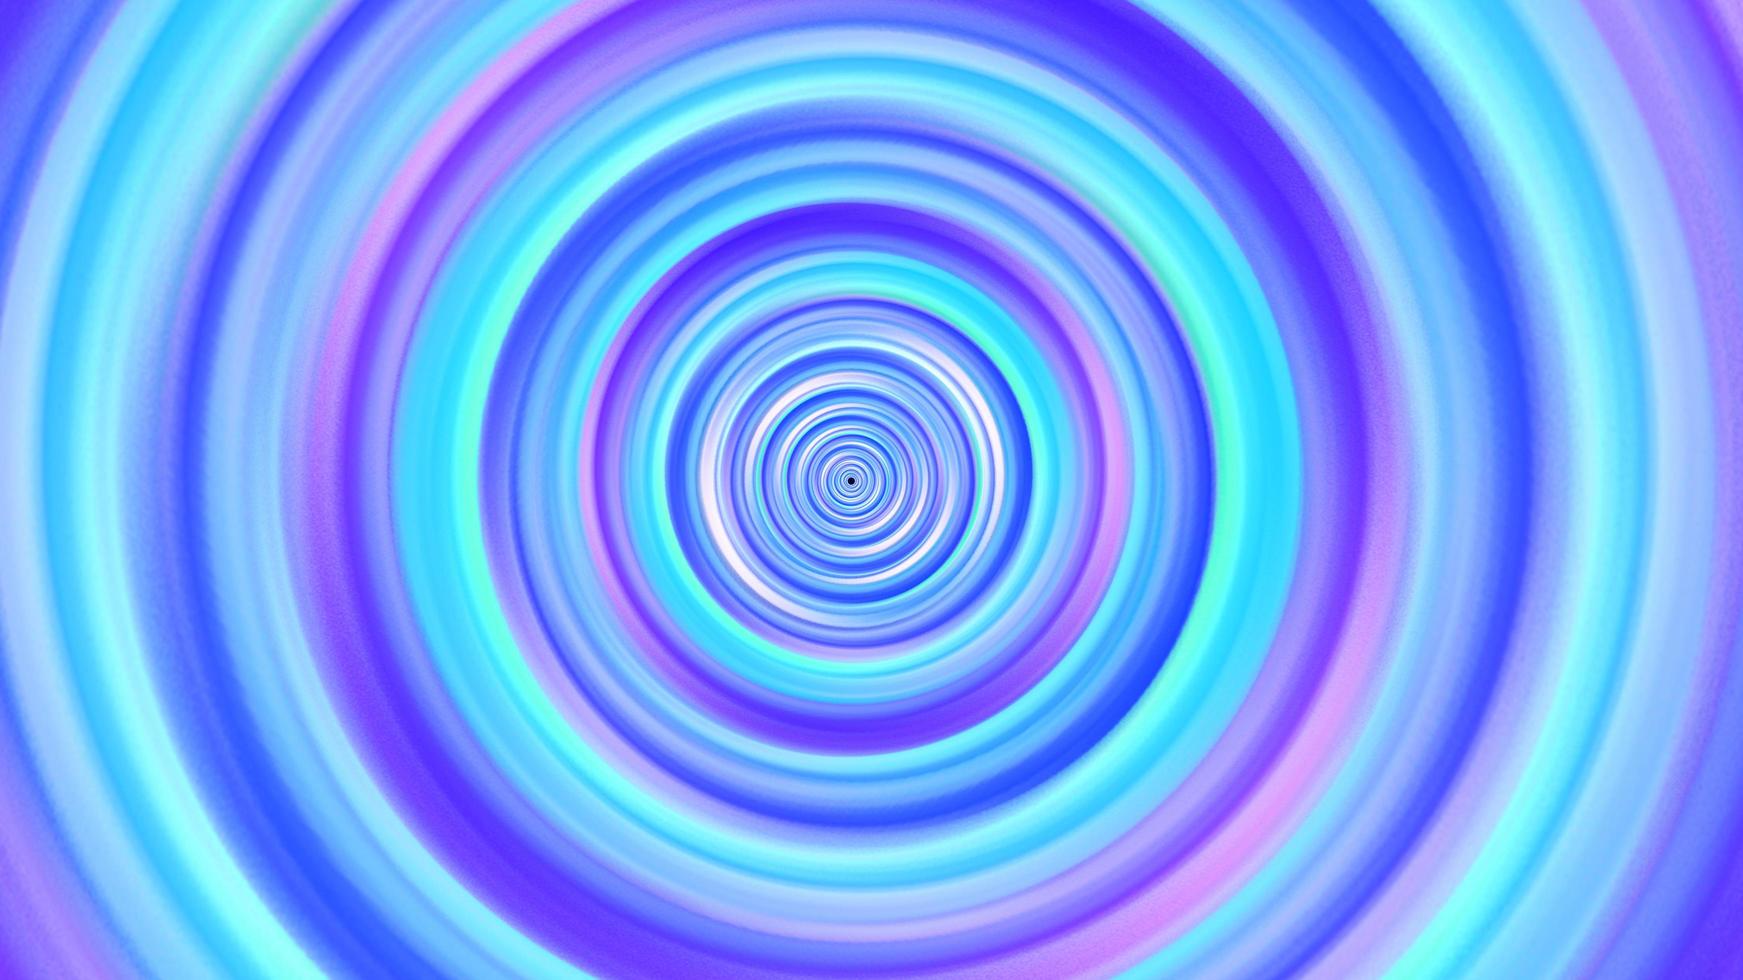 Neon Radial spiral forward tunnel effect meta universe technology sense background photo